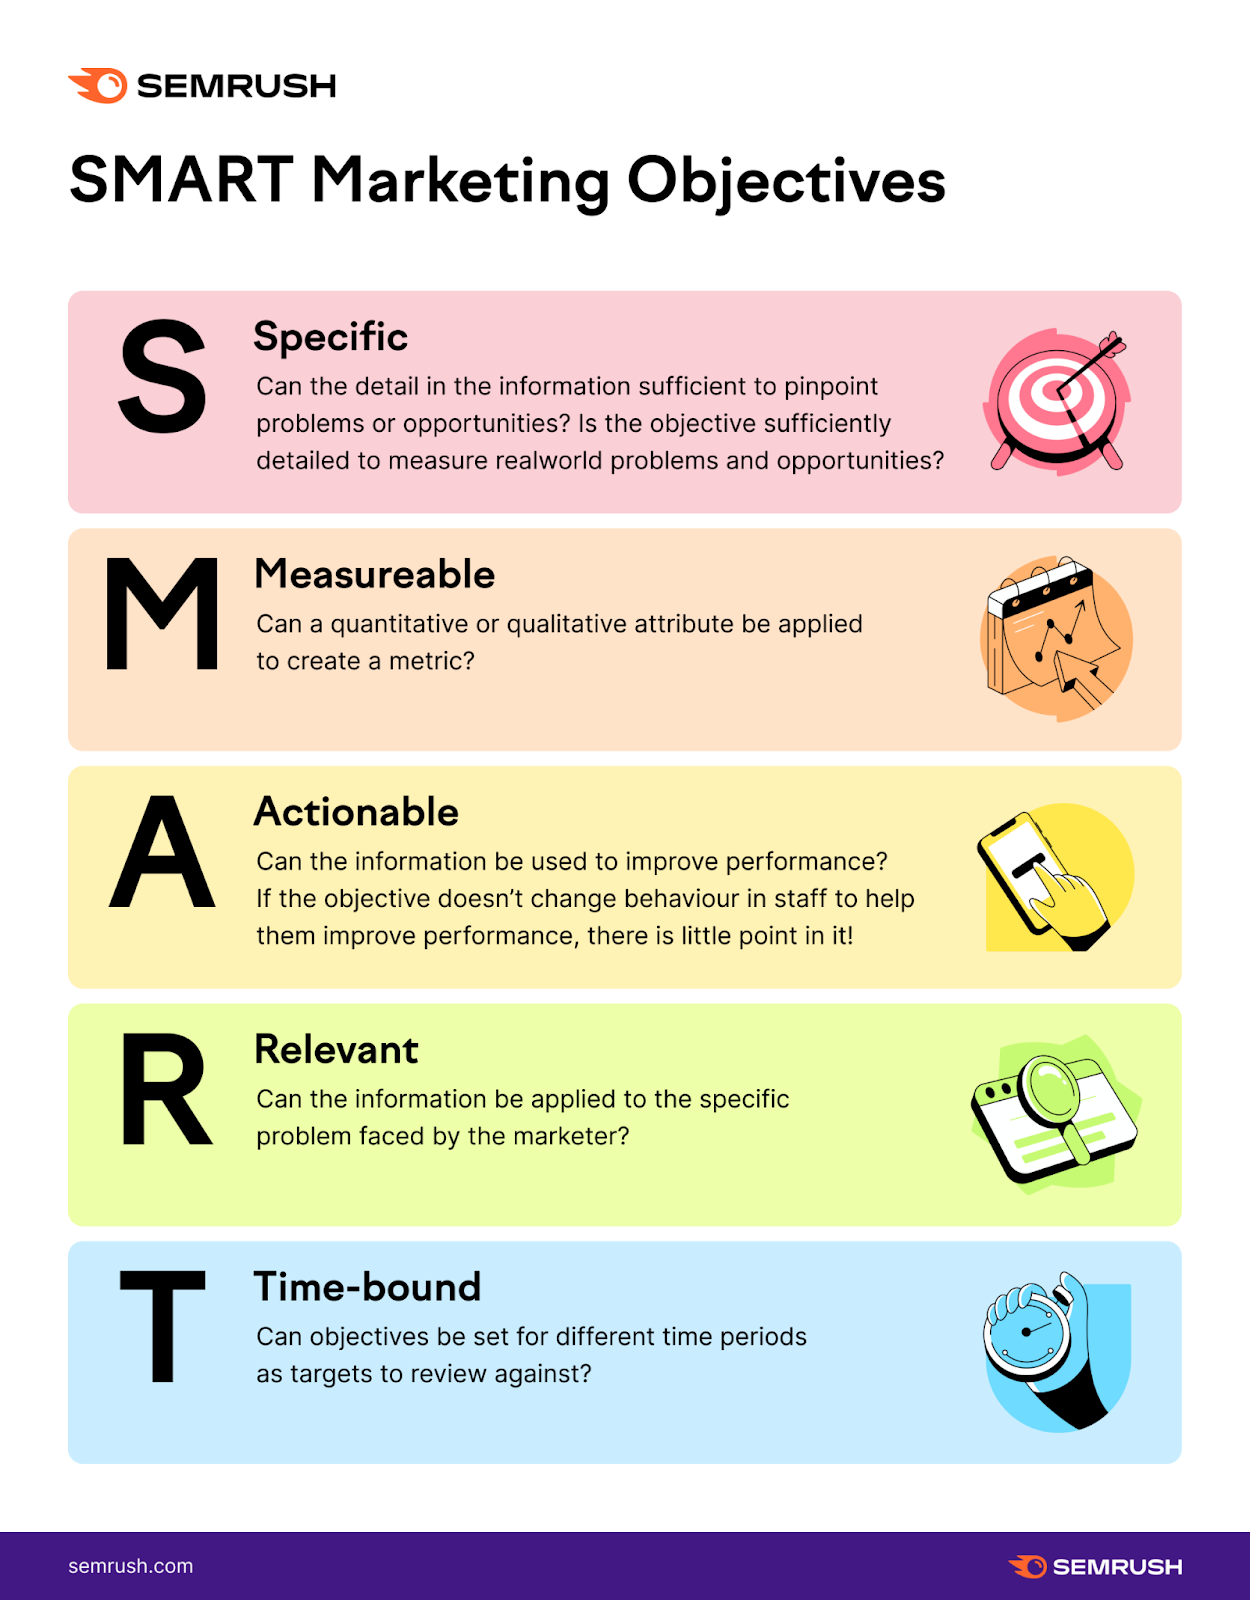 an infographic explaining "SMART Marketing Objectives"